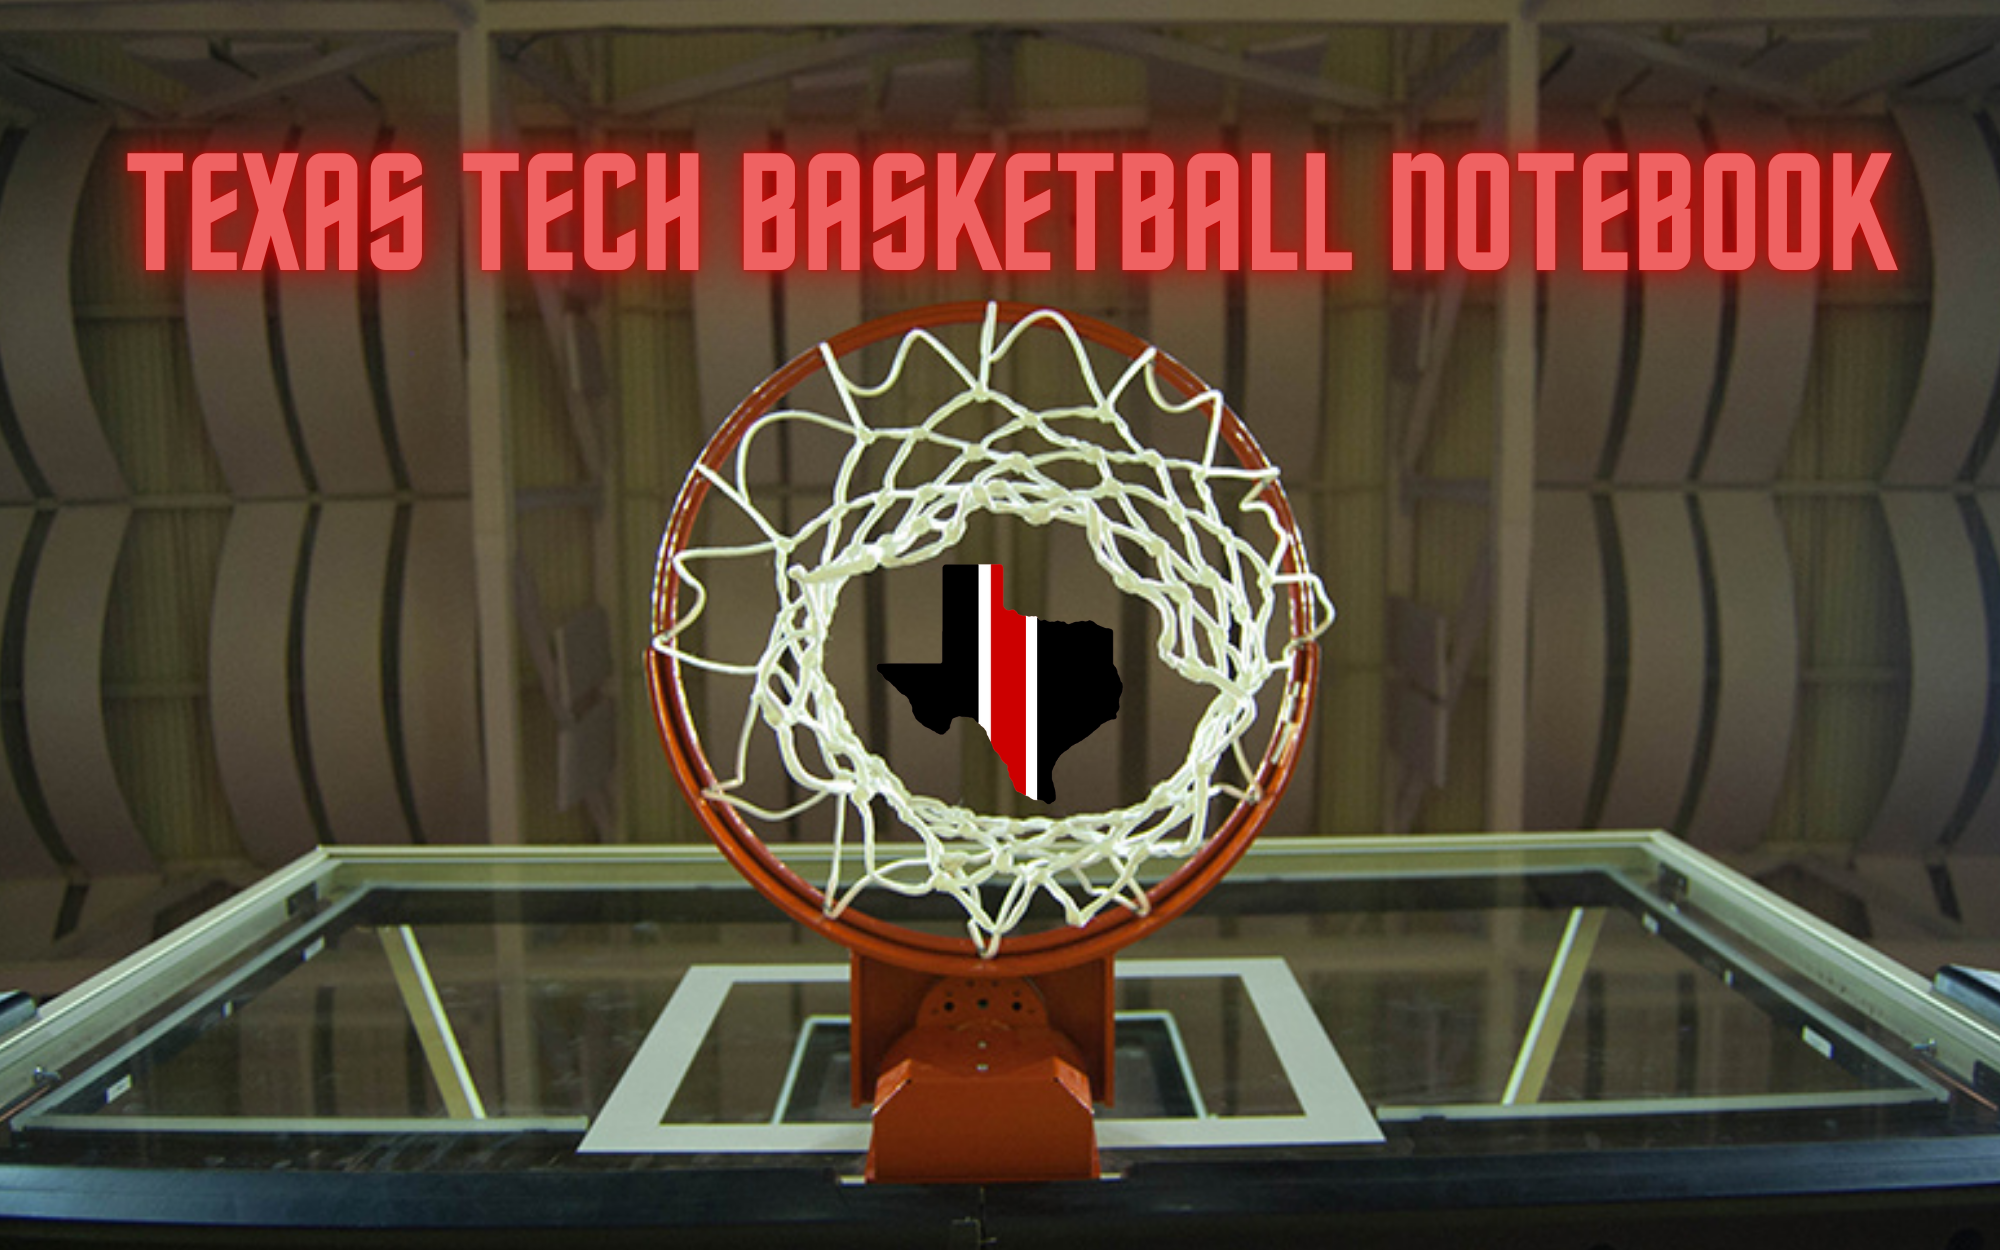 Texas Tech Basketball Notebook: Big 12 Preview